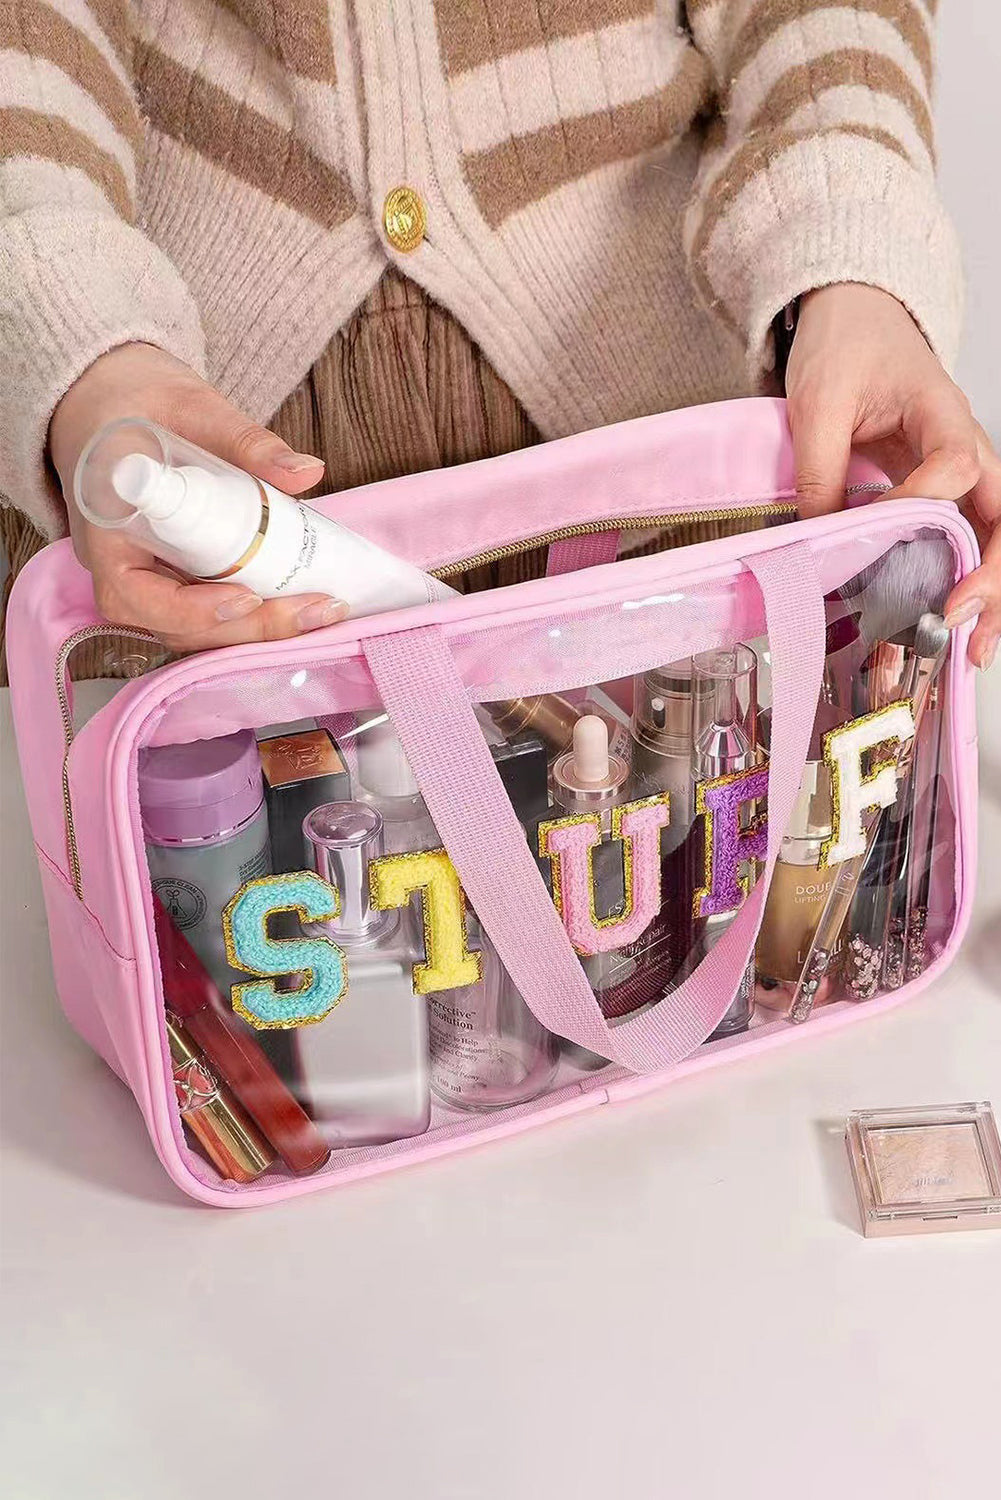 Pink STUFF Patch Clear Makeup Bag